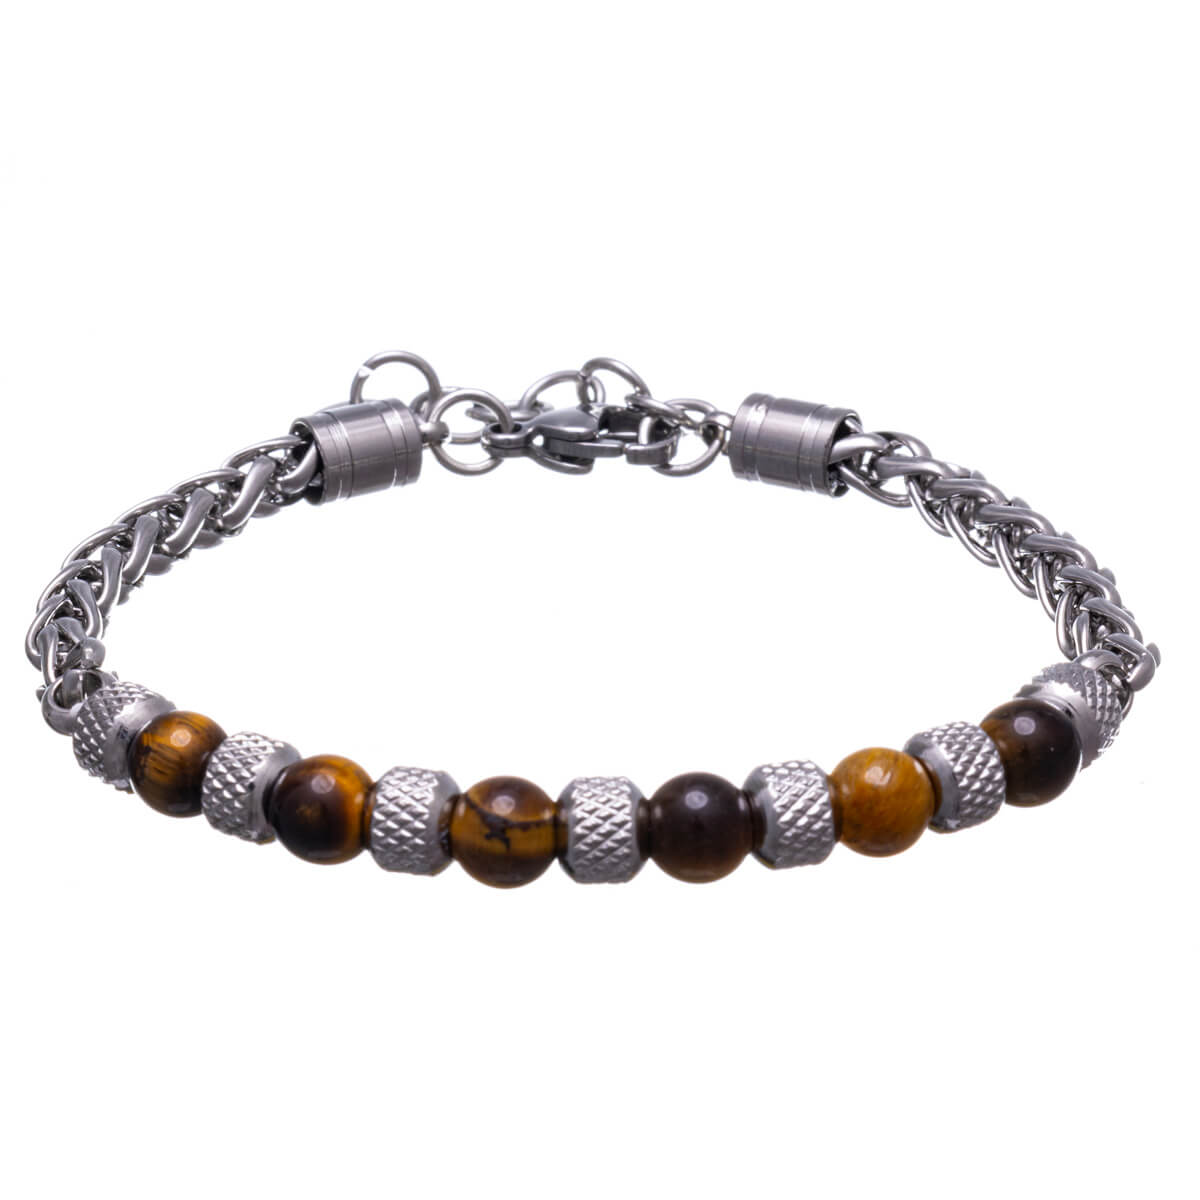 Steel bracelet with stone beads 20cm (Steel 316L)